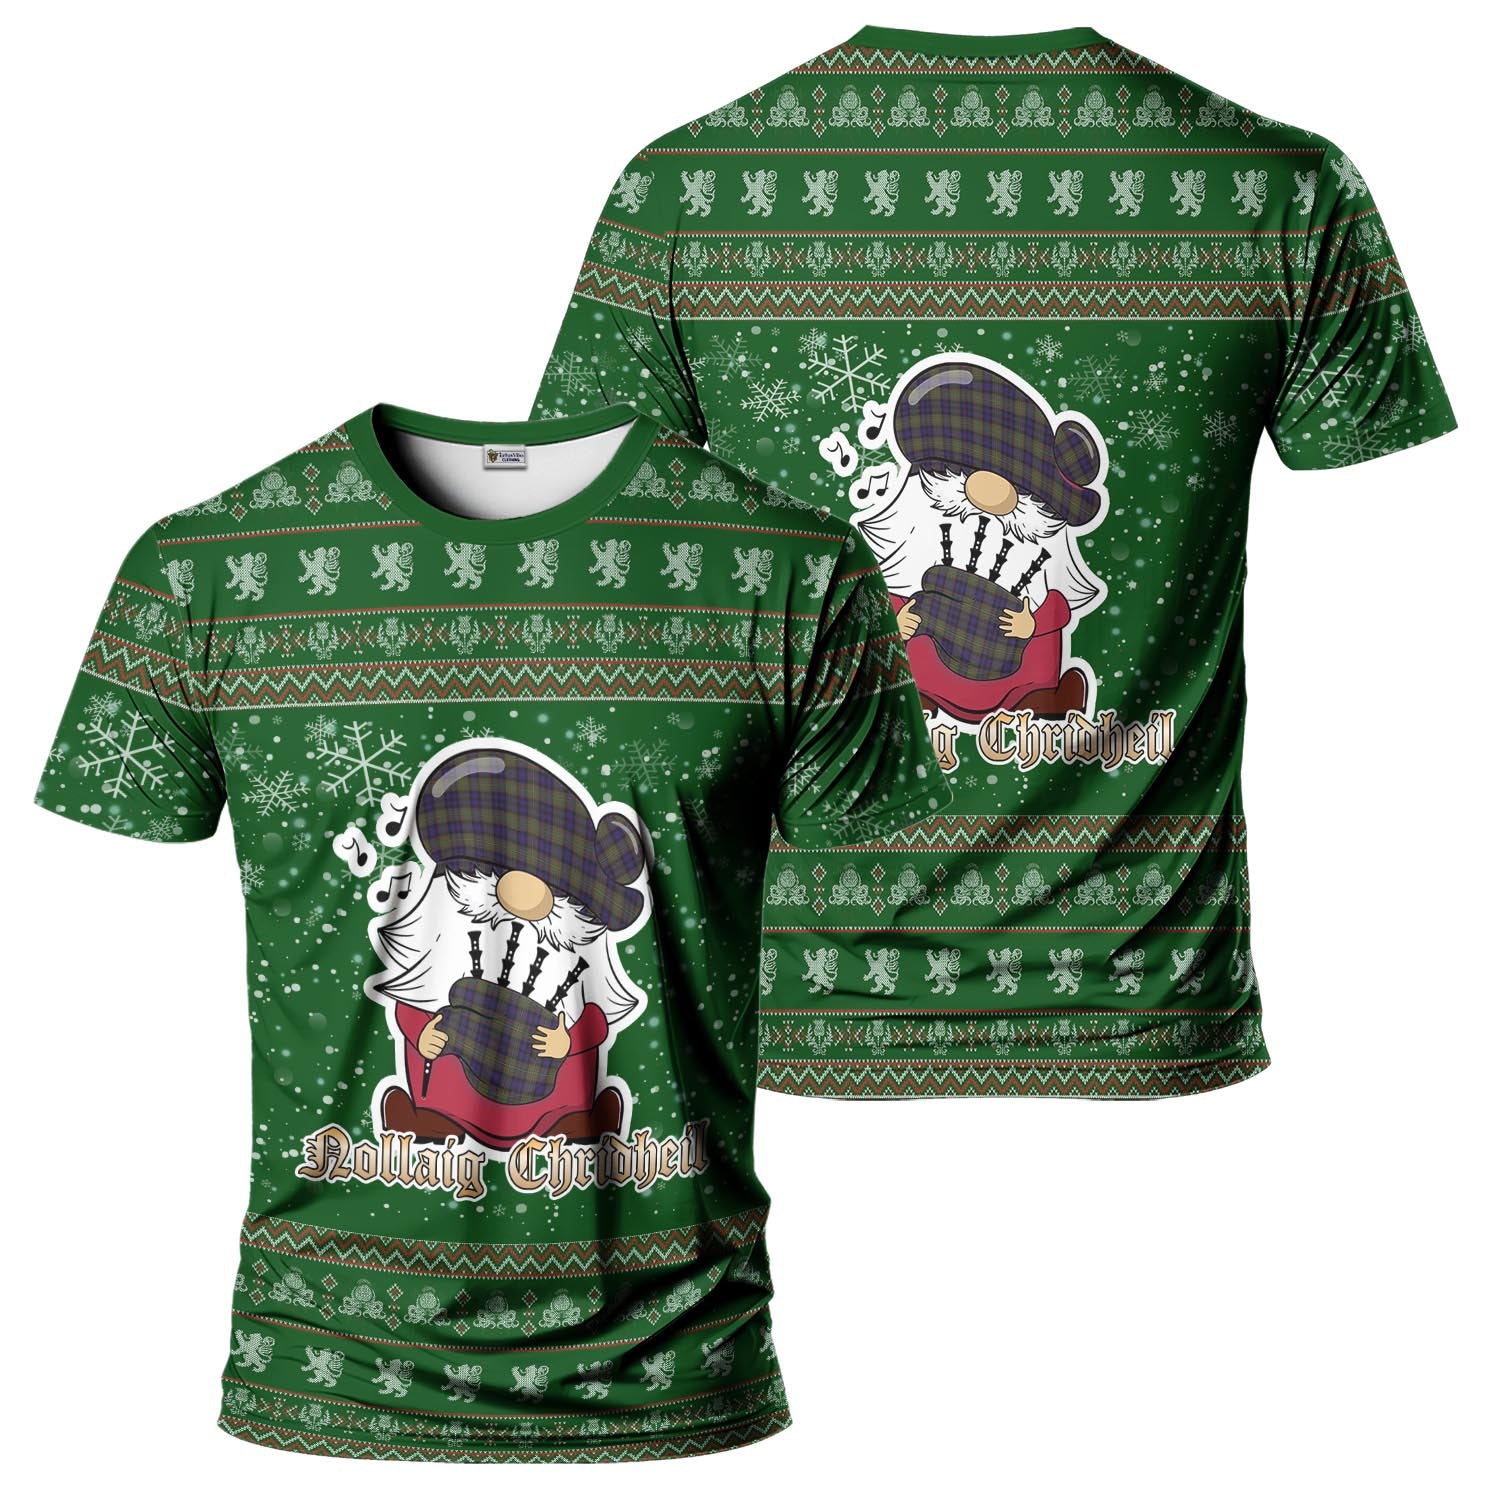 MacLellan Clan Christmas Family T-Shirt with Funny Gnome Playing Bagpipes Men's Shirt Green - Tartanvibesclothing